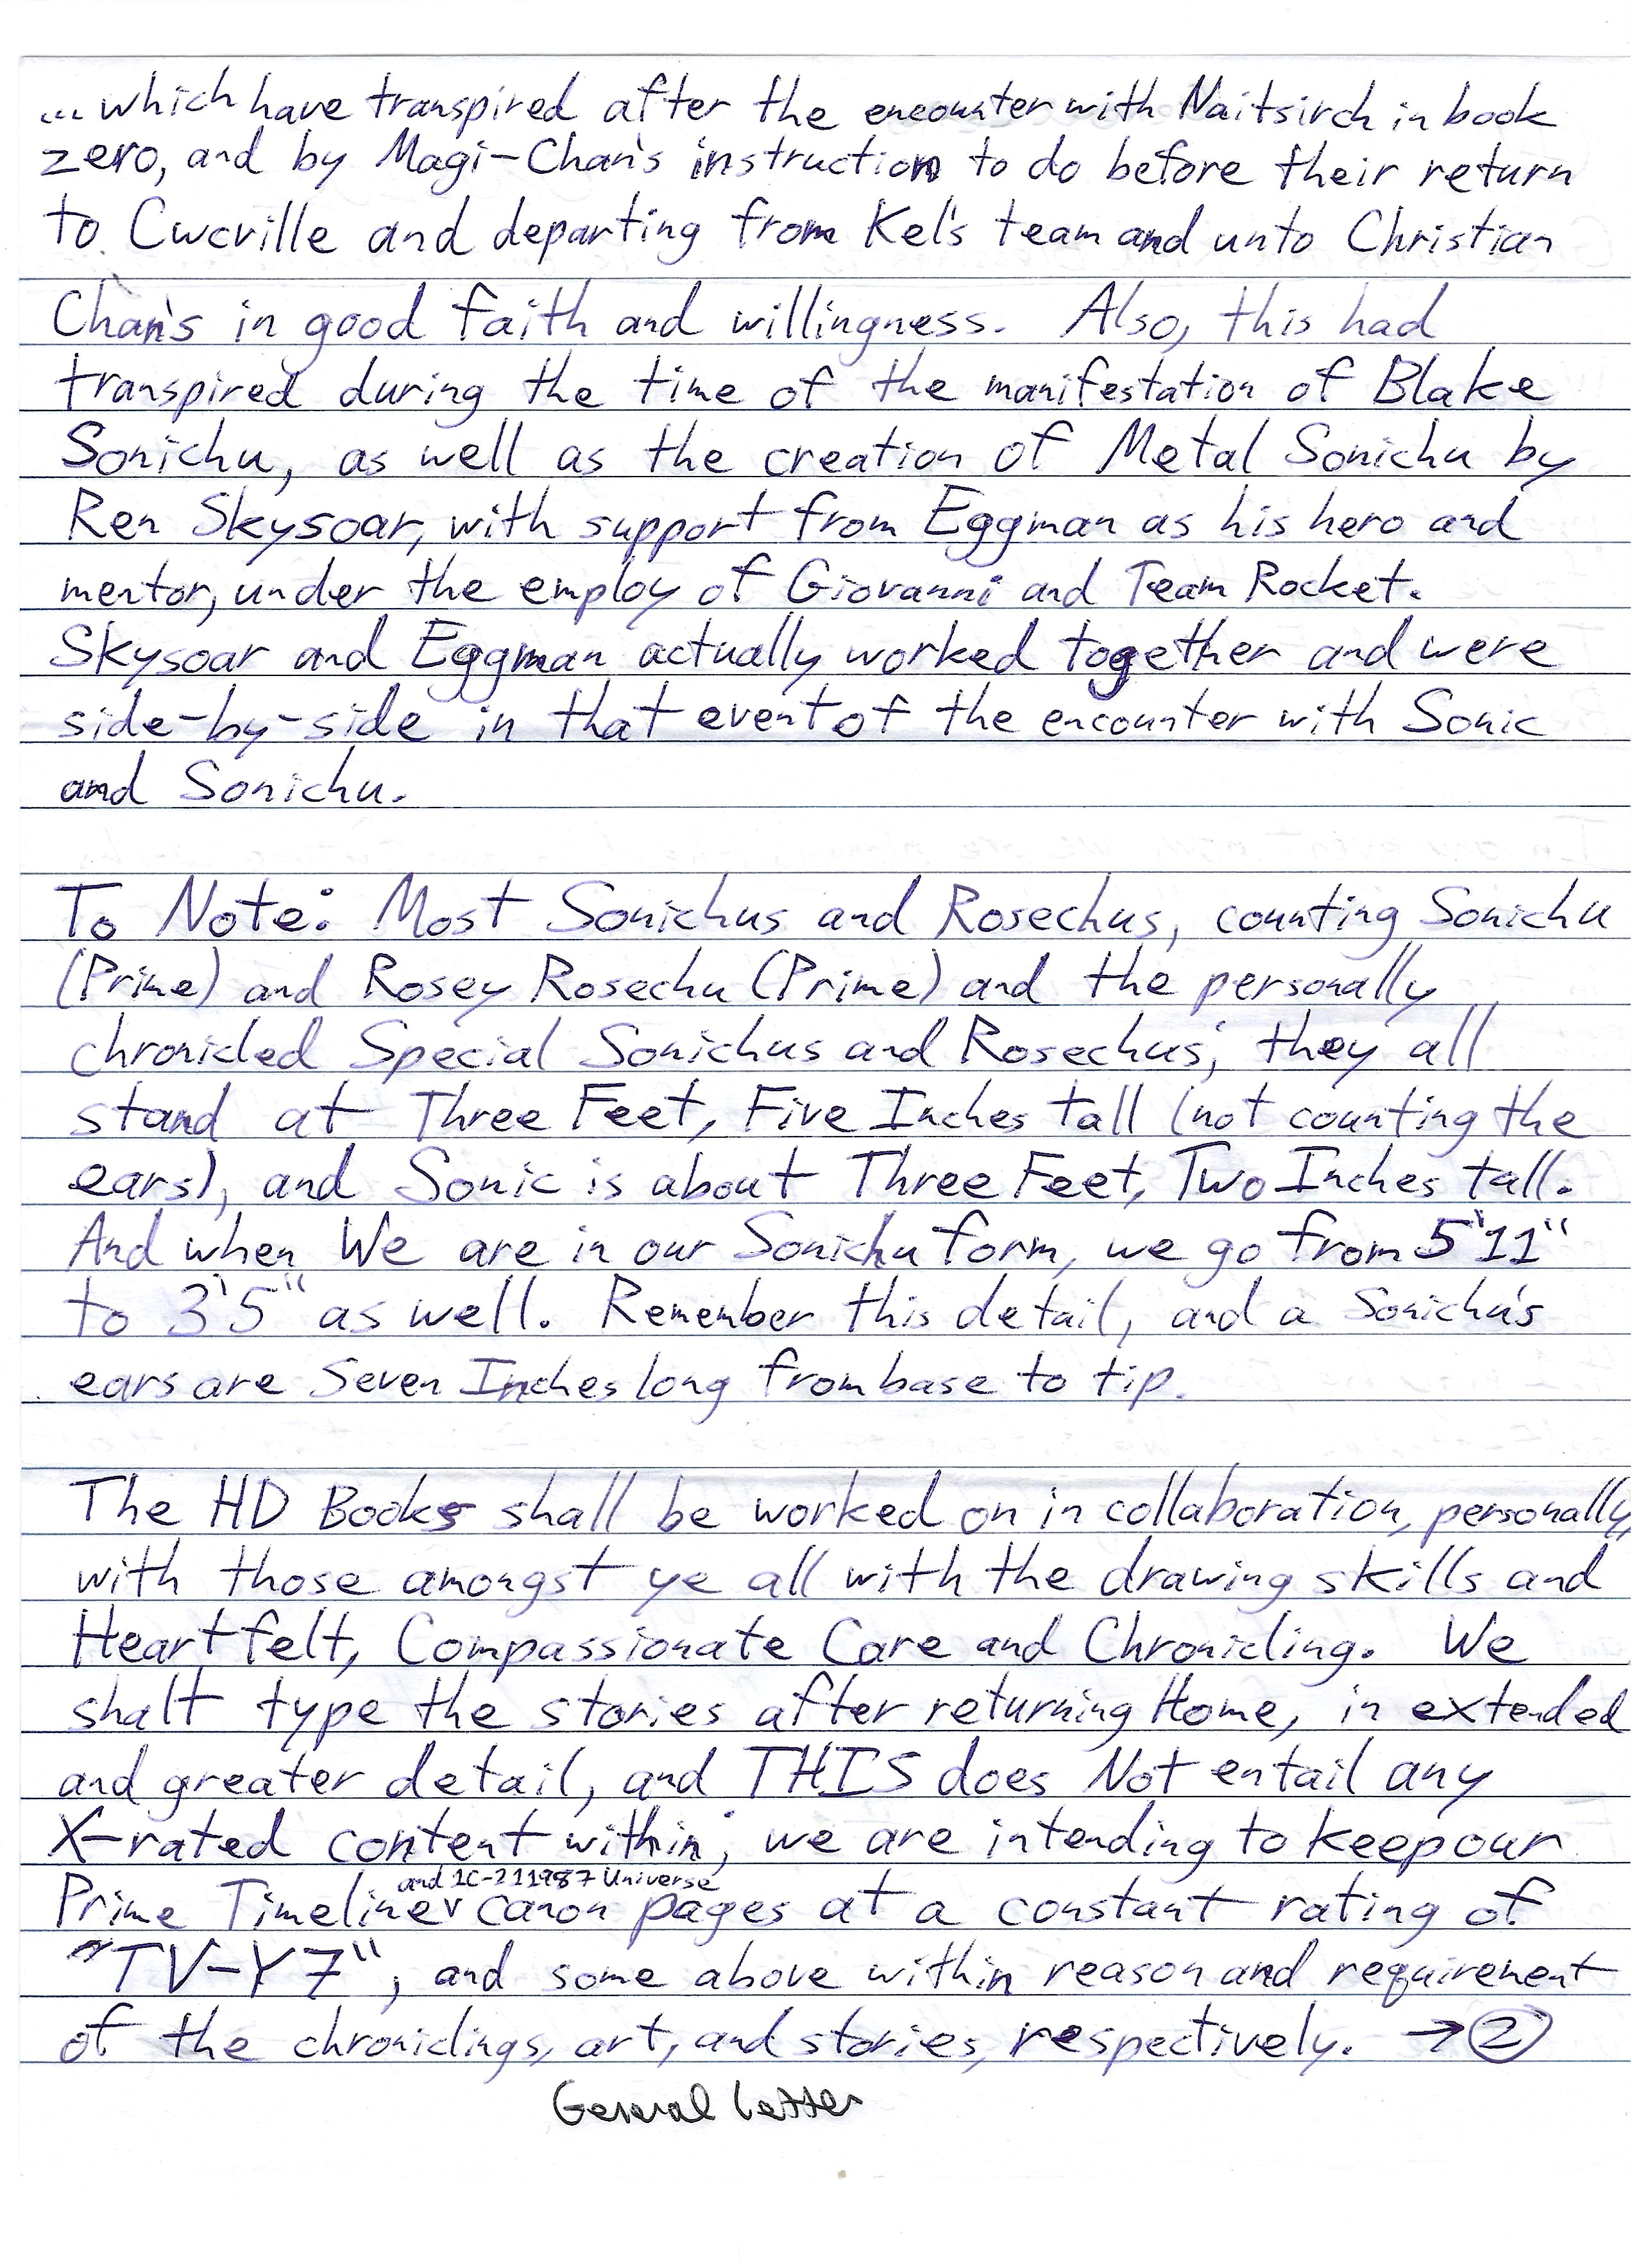 General Letter Page 2.jpg